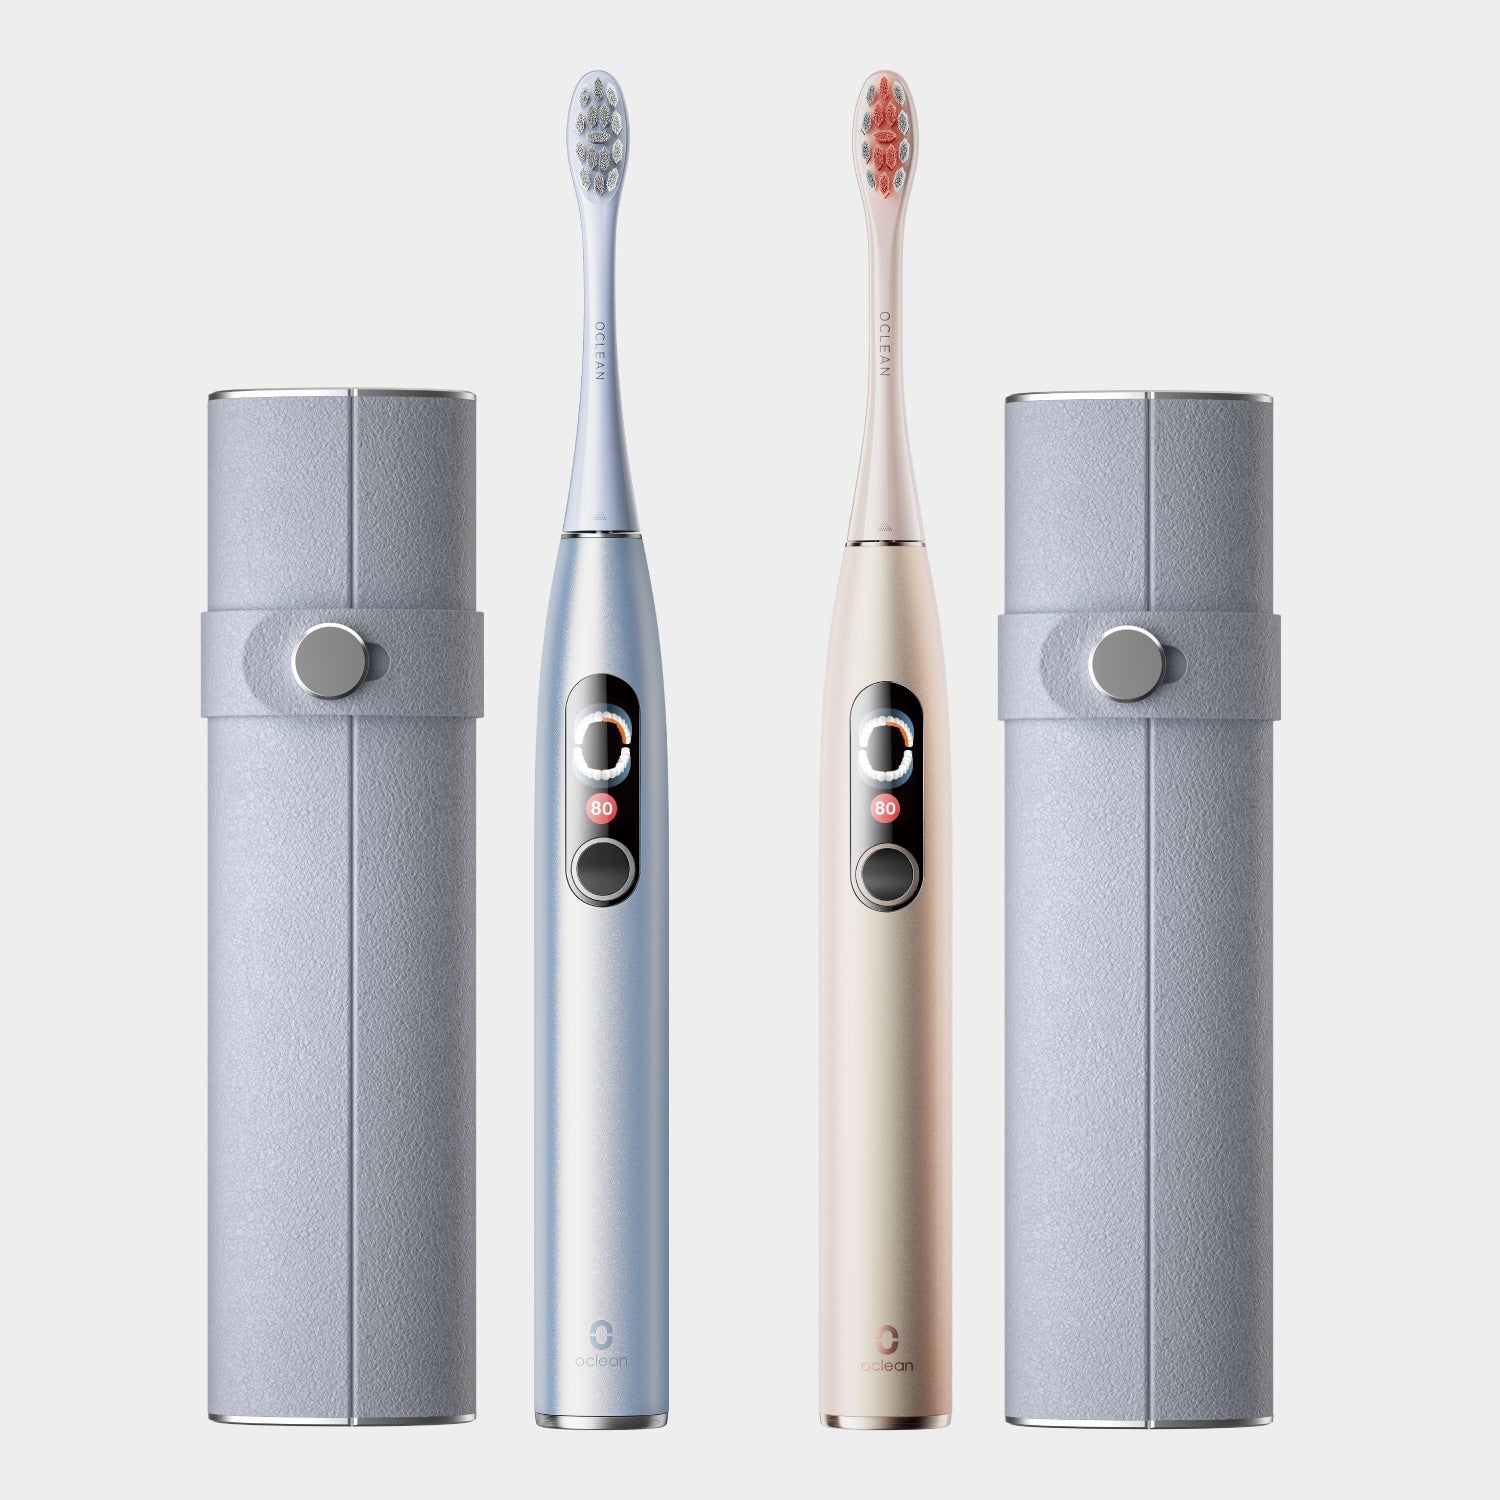 Oclean X Pro Digital Premium Set-Toothbrushes-Oclean US Store